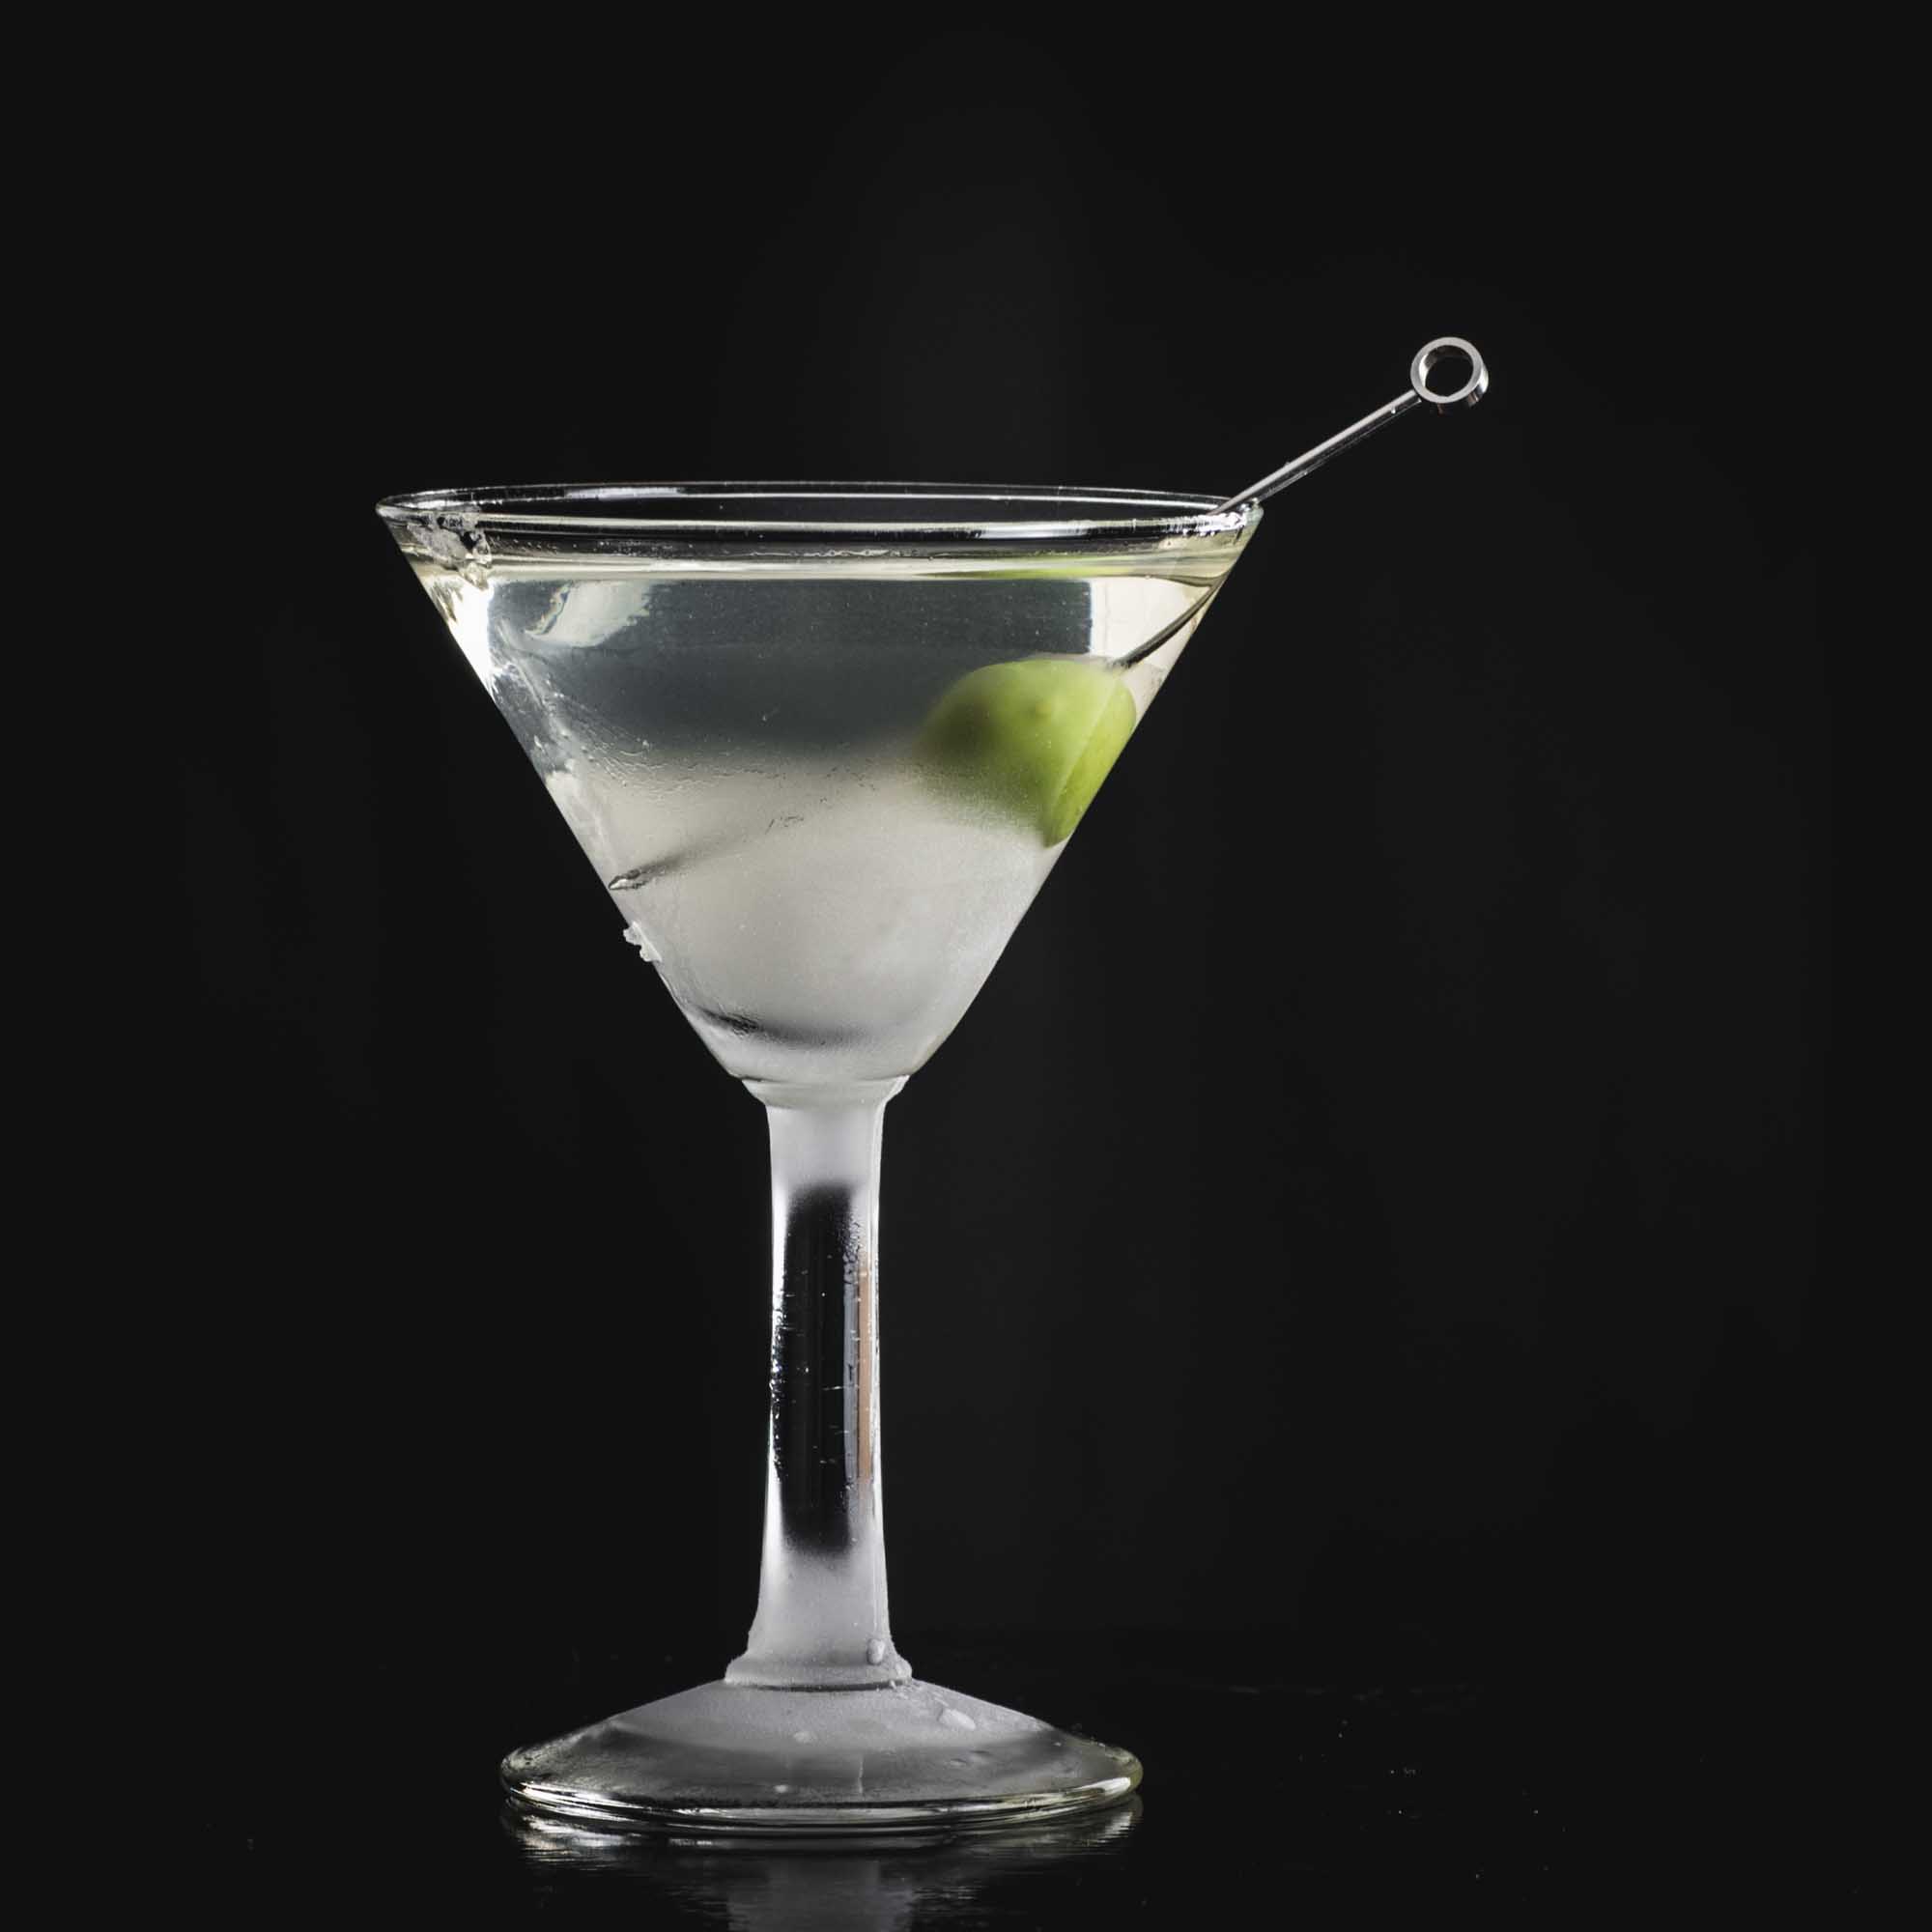 Un martini sec garni d'une seule olive.